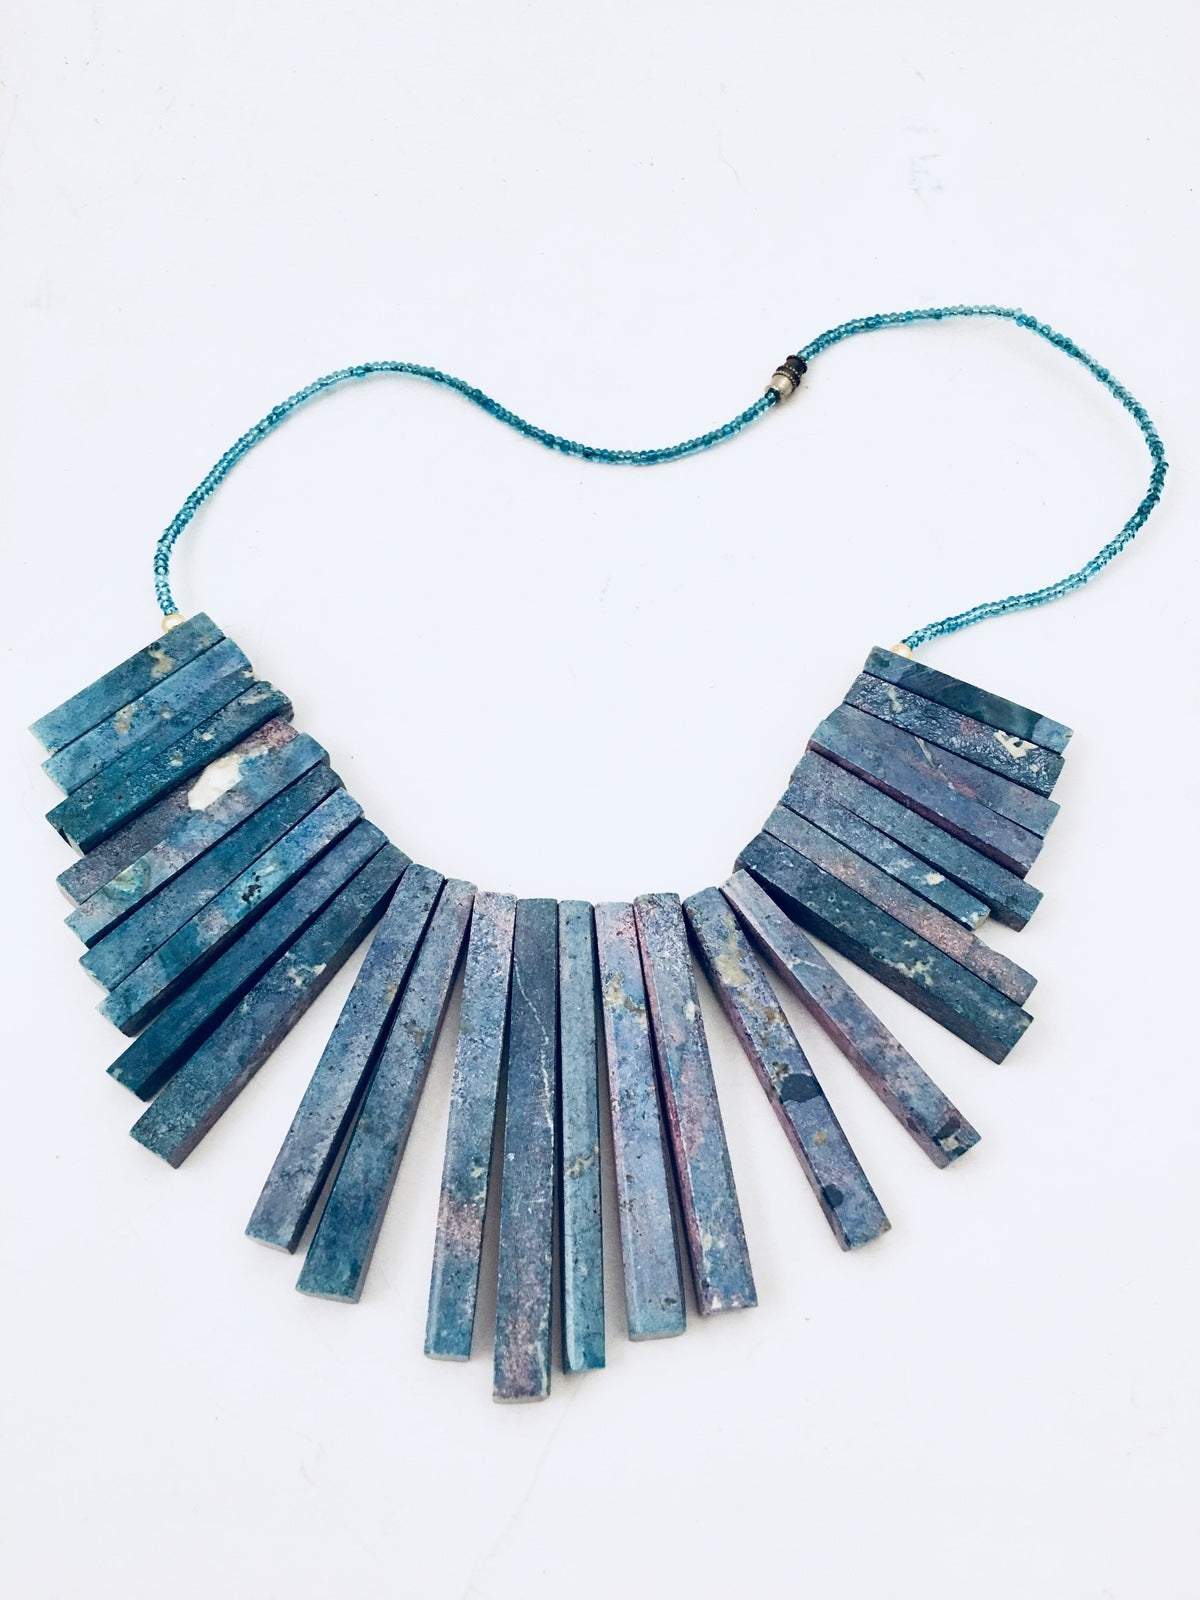 Ethnic Necklace Spike Bib Handmade Vintage Jewelry